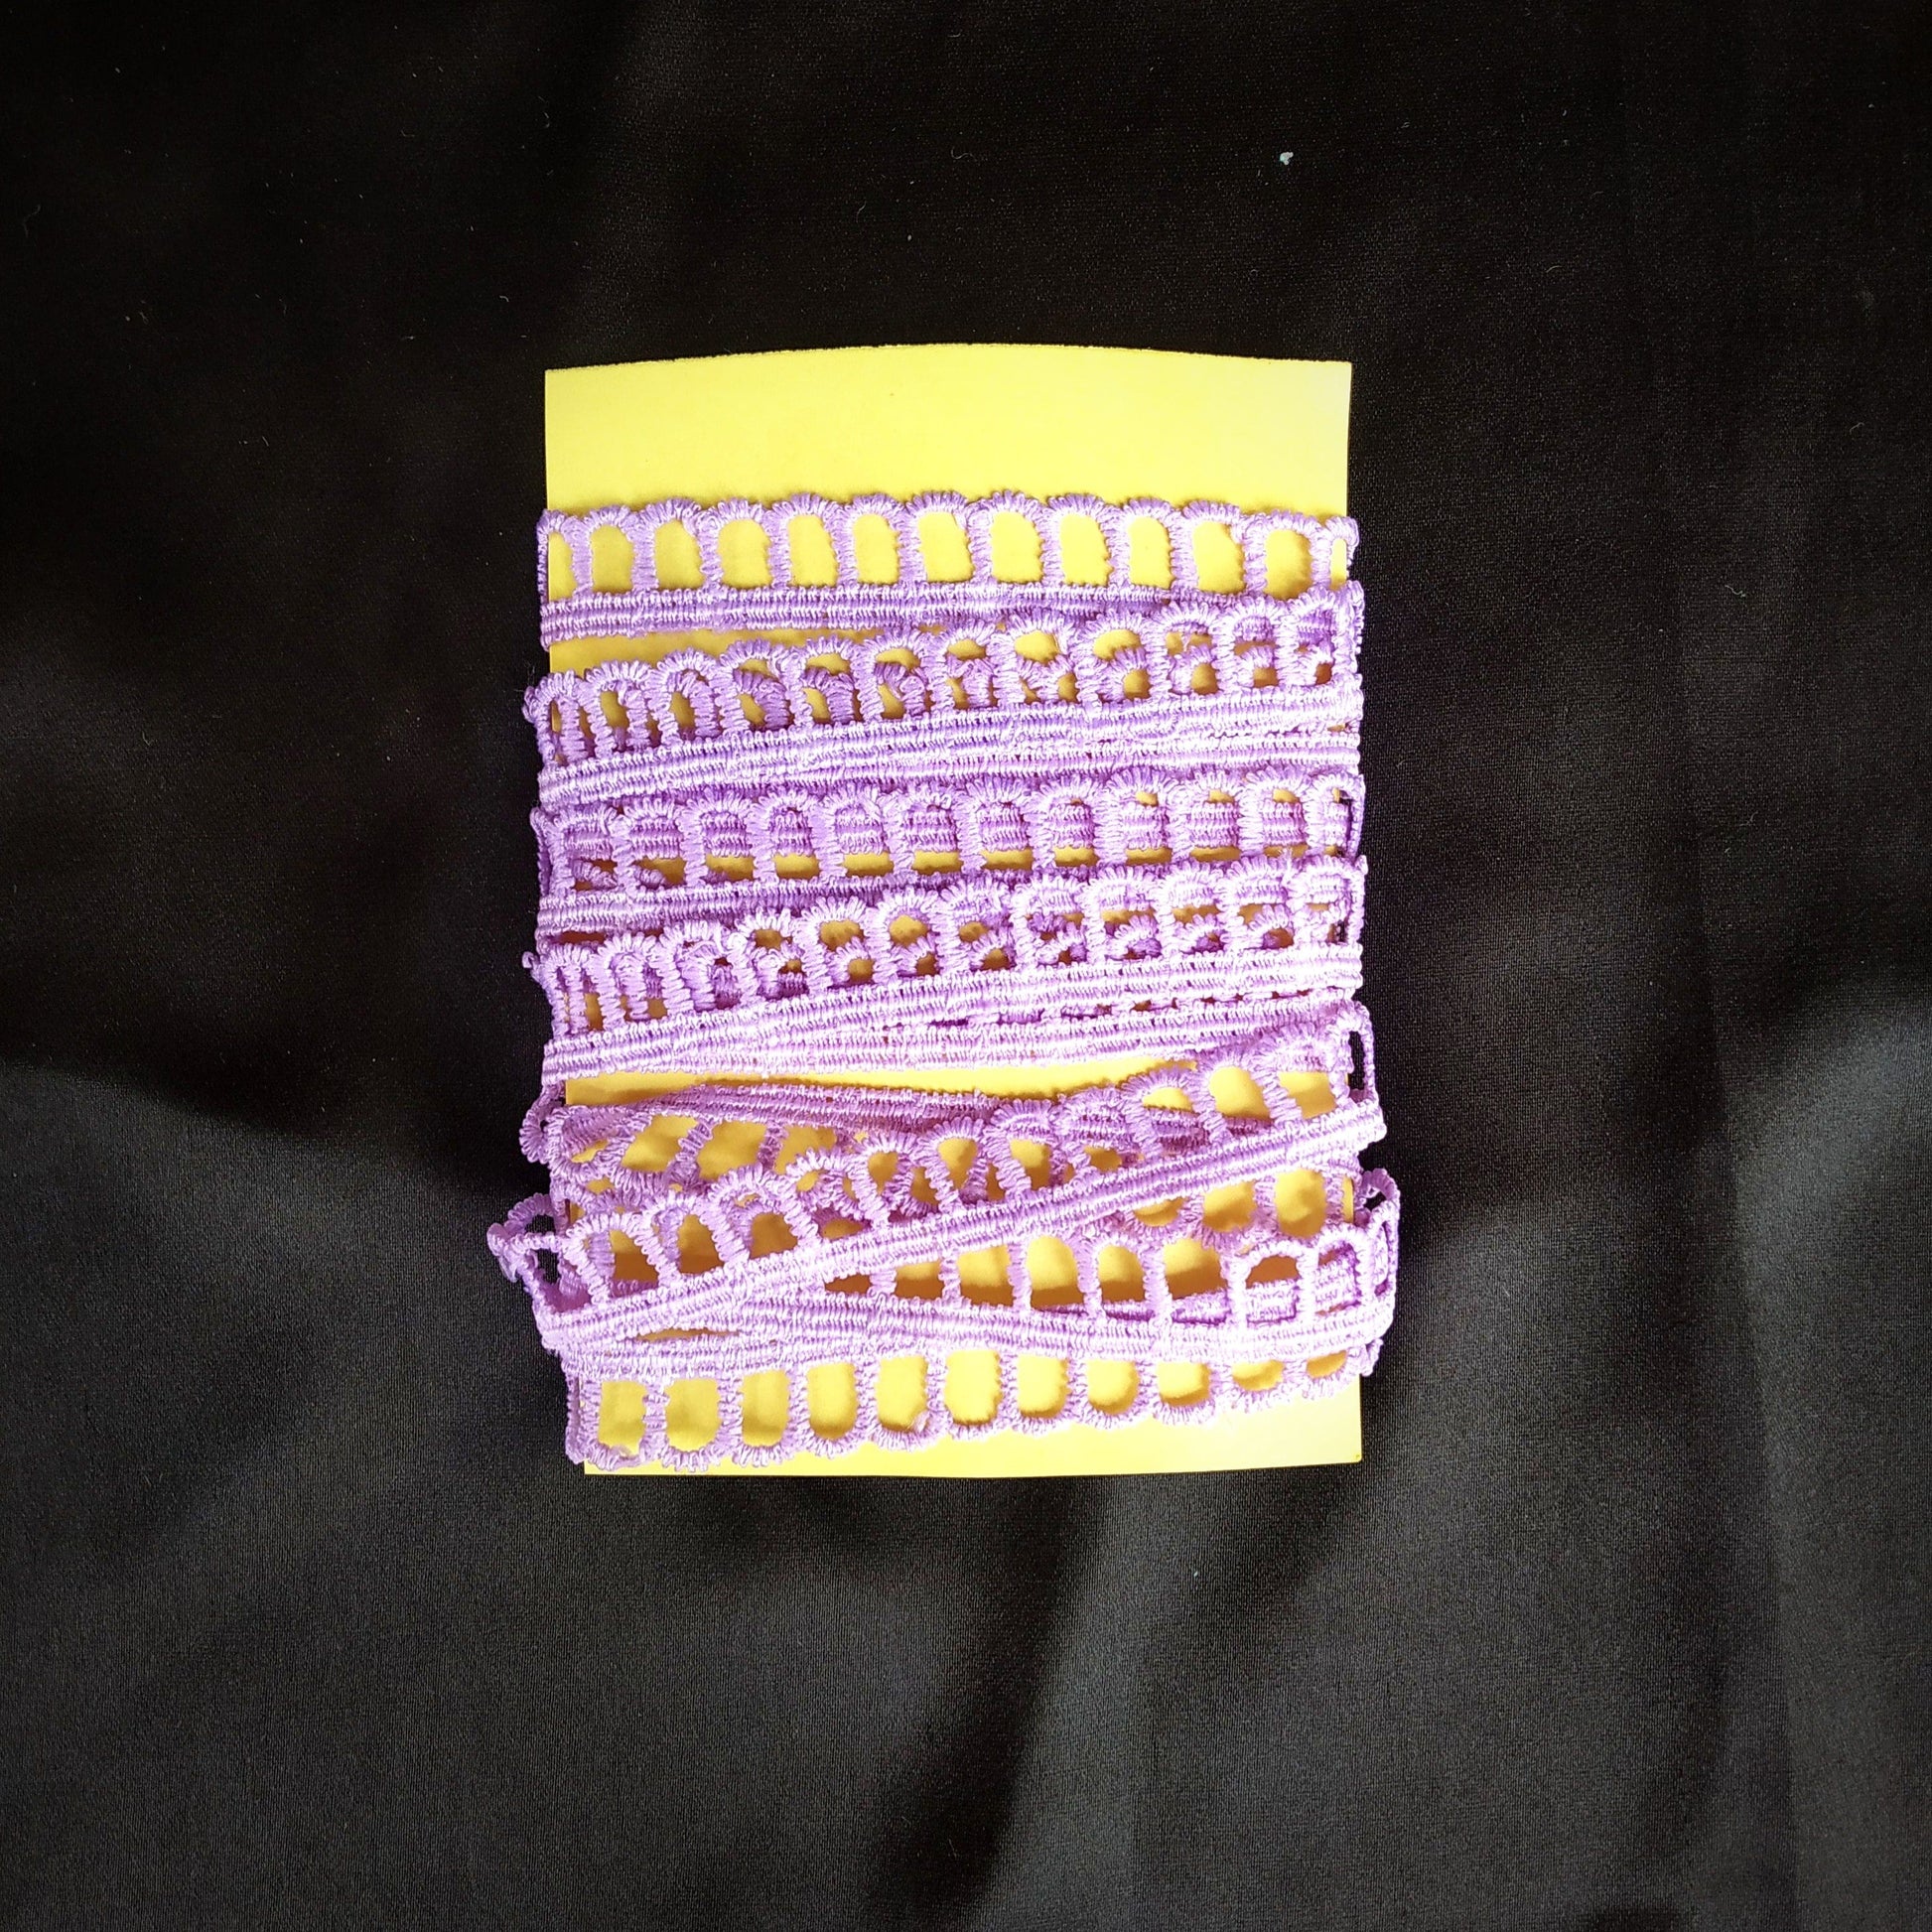 Premium 1.5 inch satin ribbon (Pastel color)